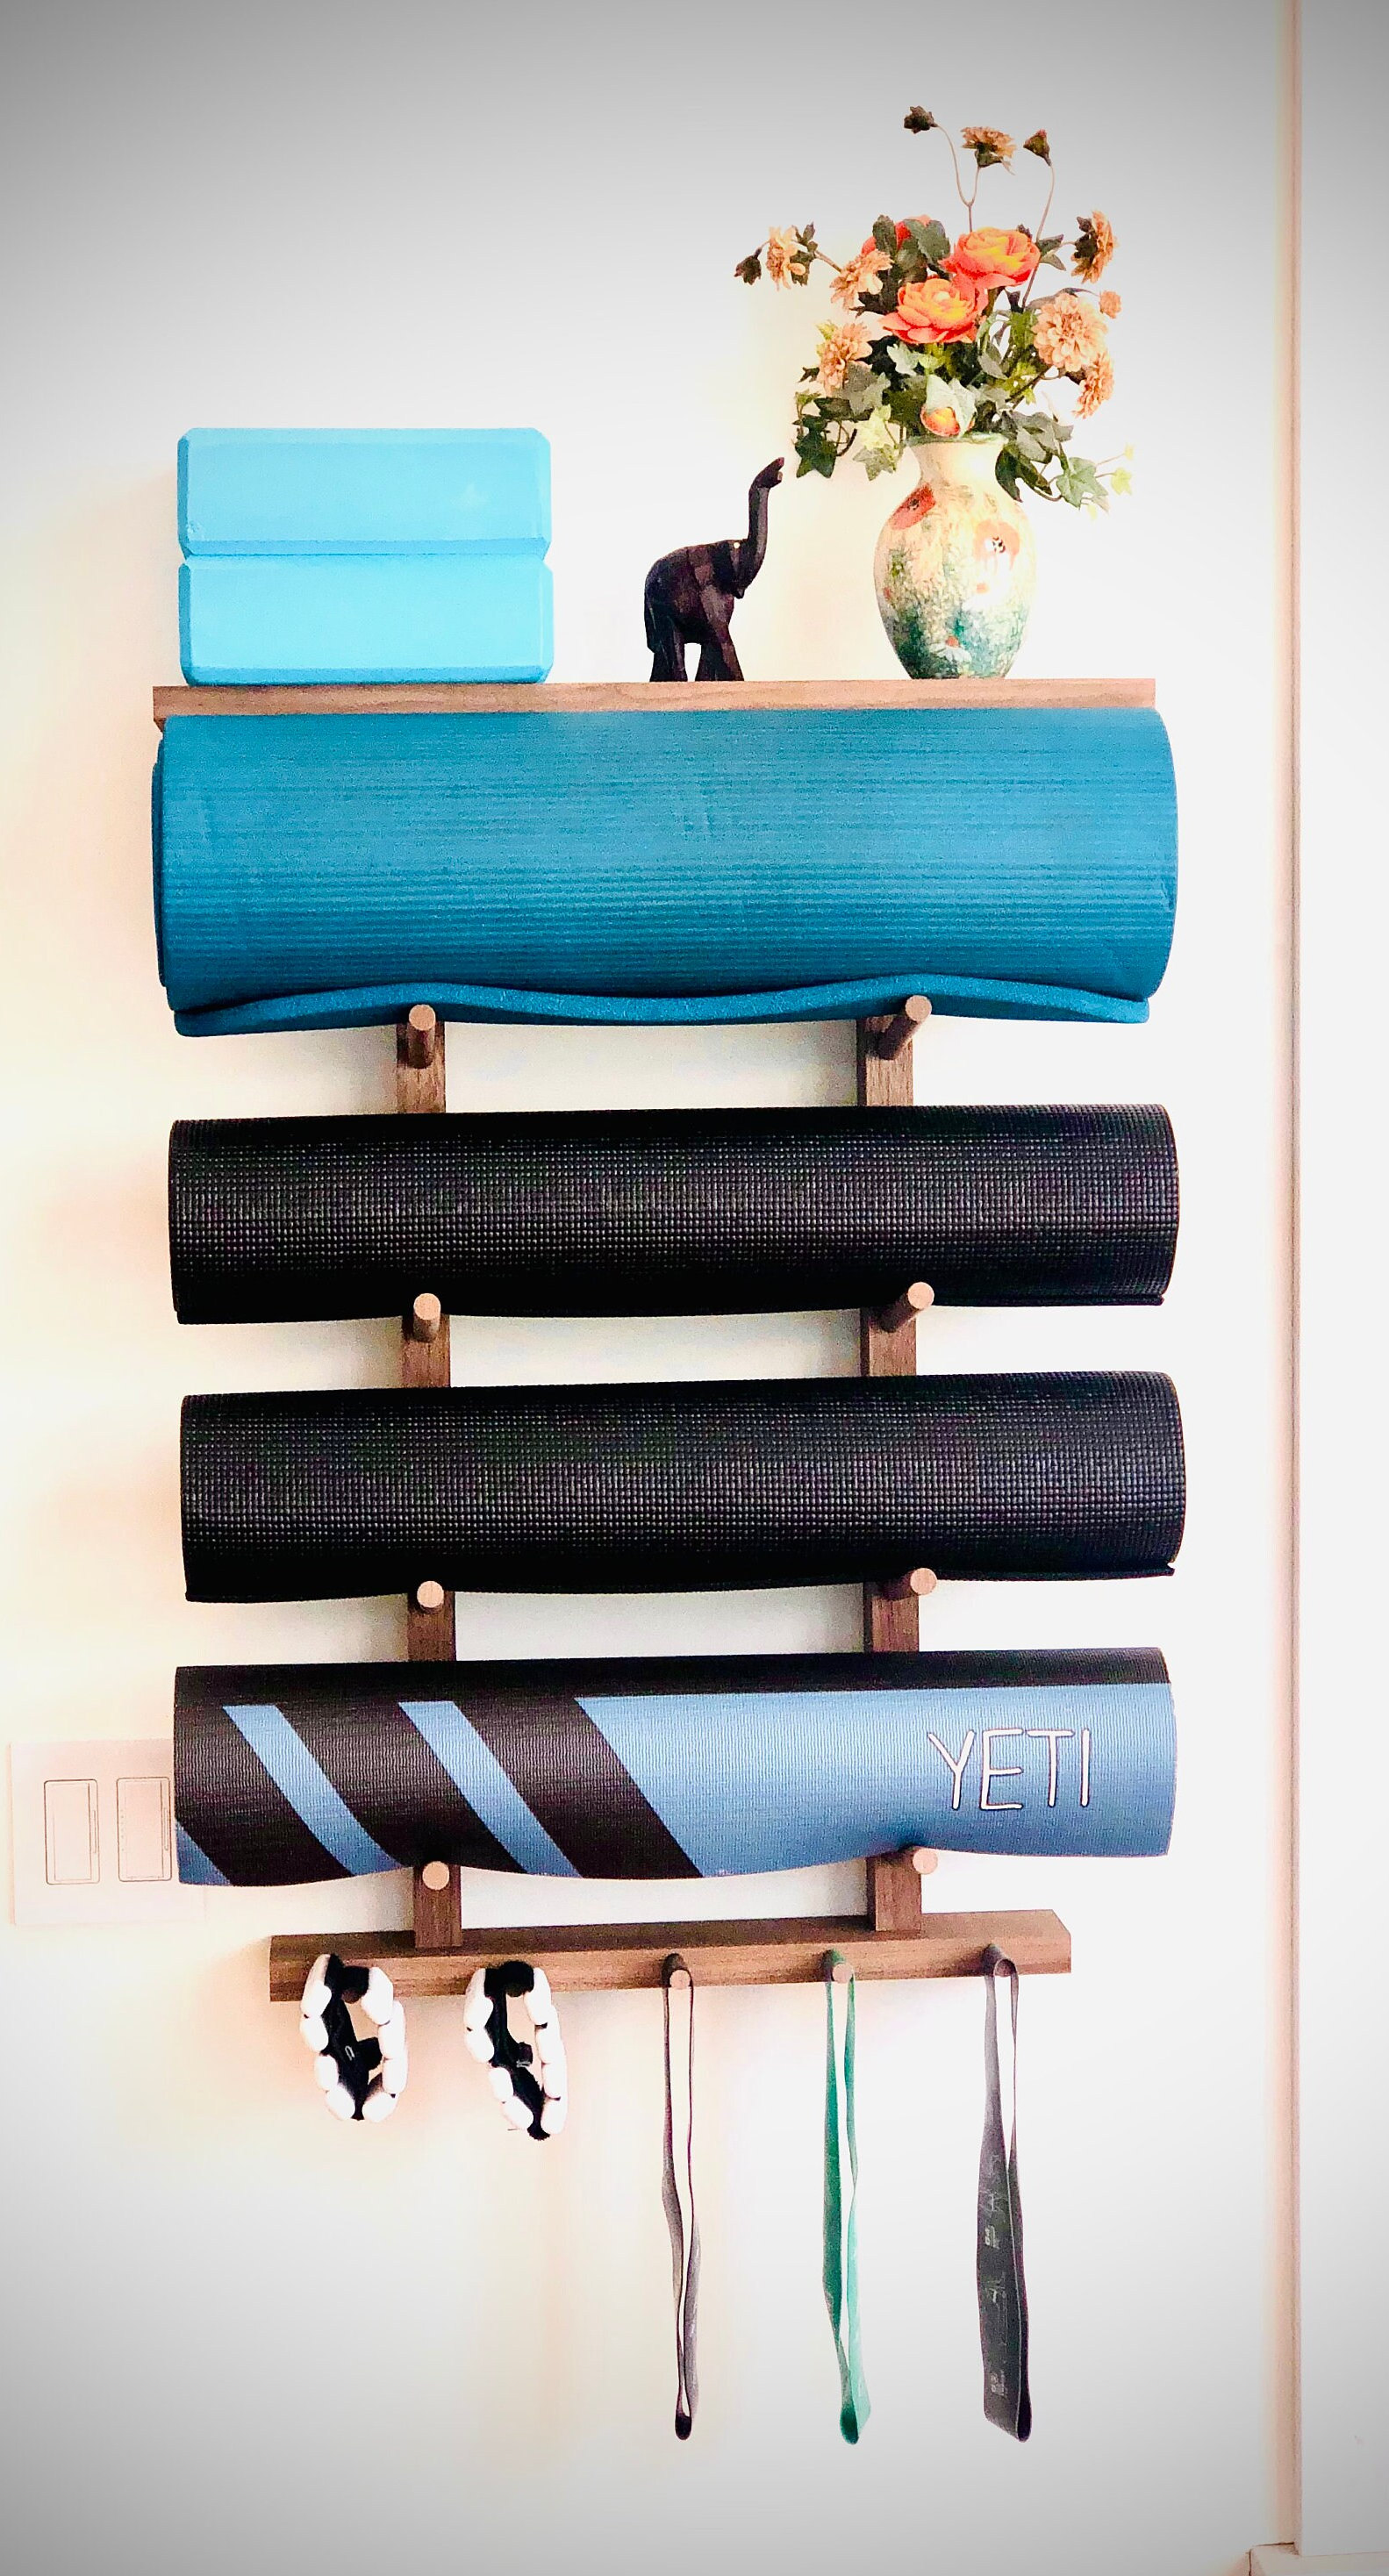 Yoga Mat Wall Holder / Umbrella Wall Holder [Dear J]